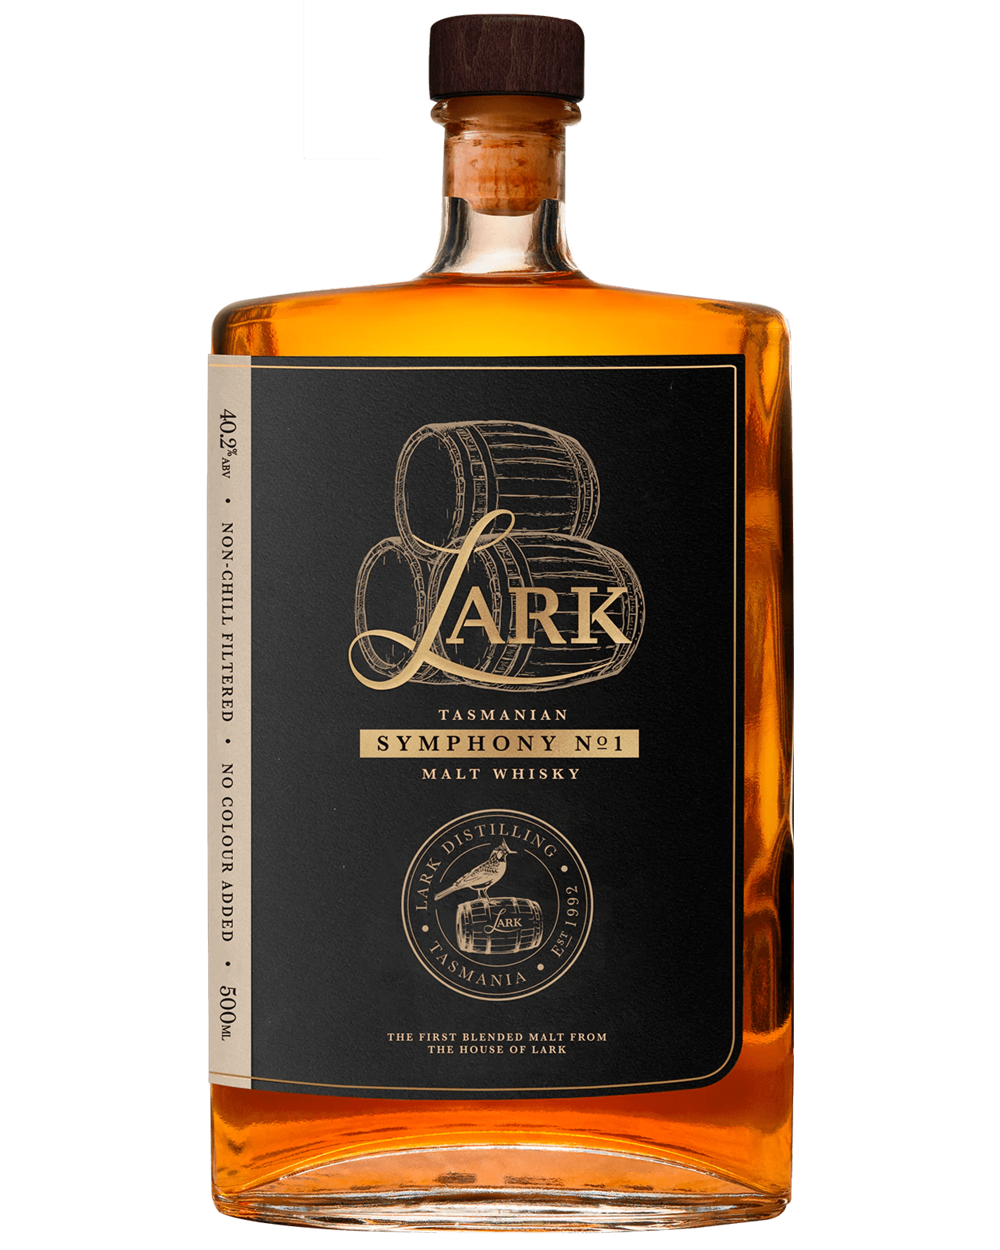 Lark Symphony No.1 Tasmanian Malt Whisky